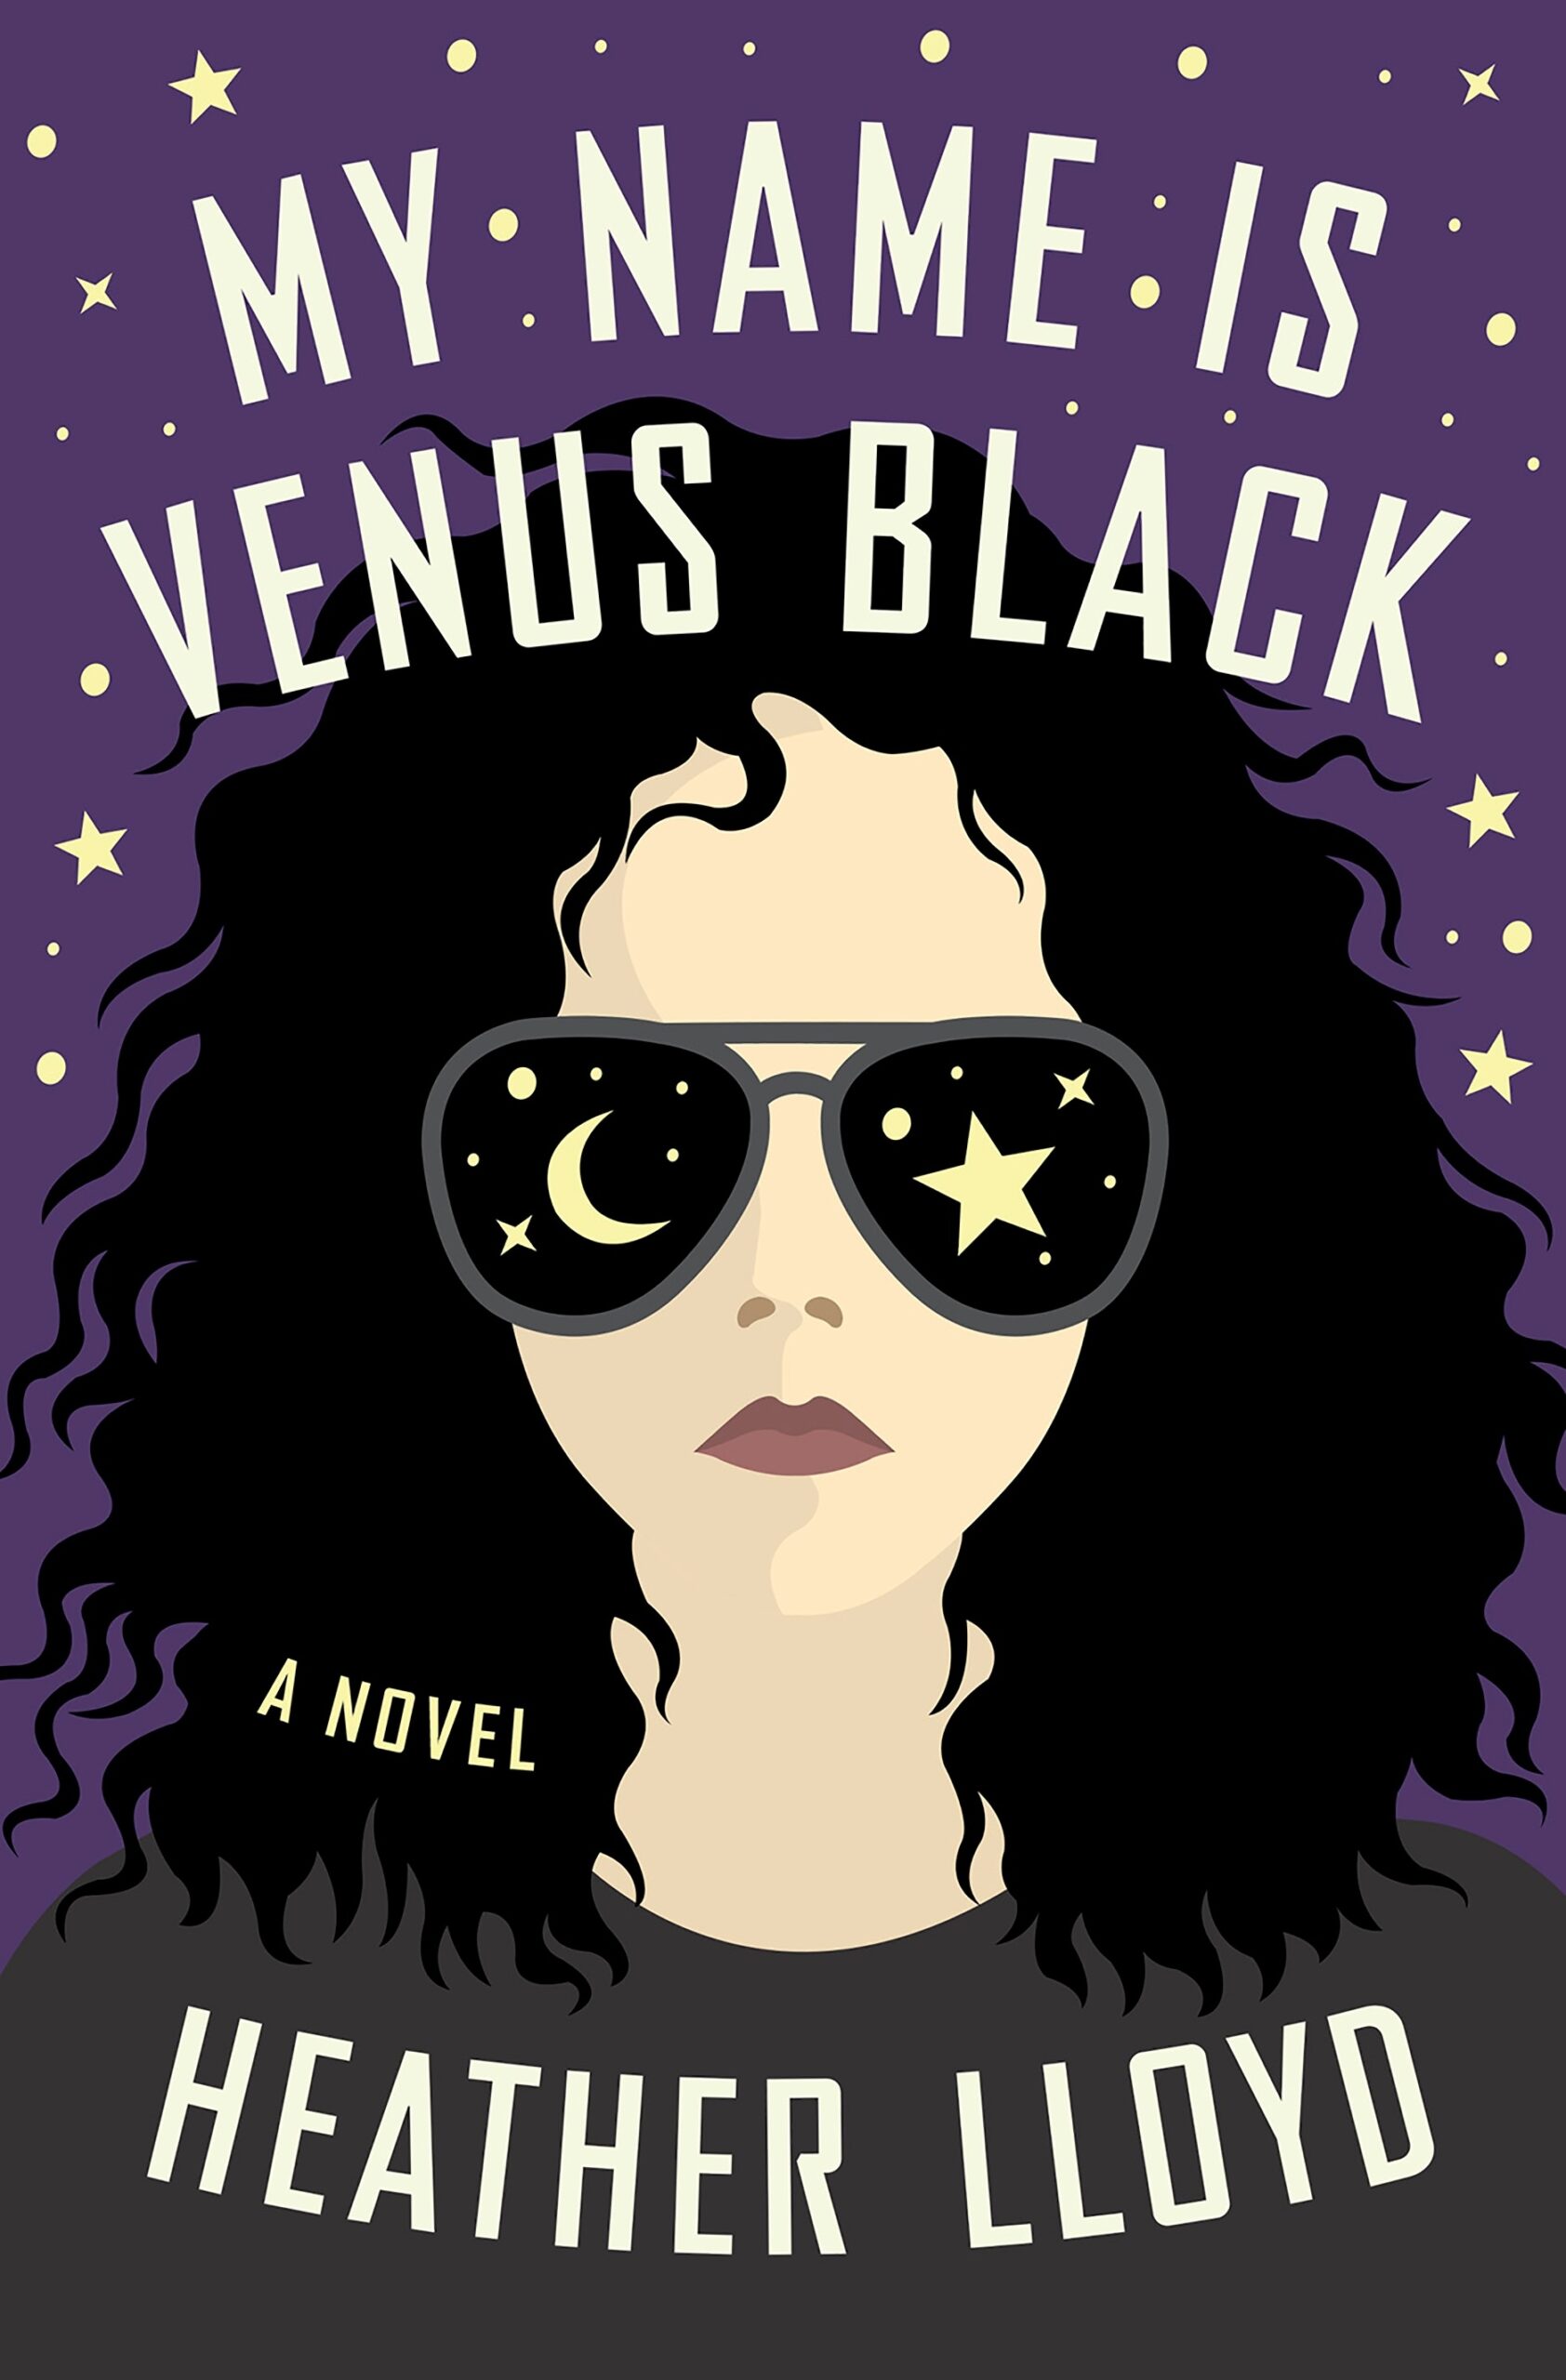 Download My Name Is Venus Black by Heather Lloyd novel free